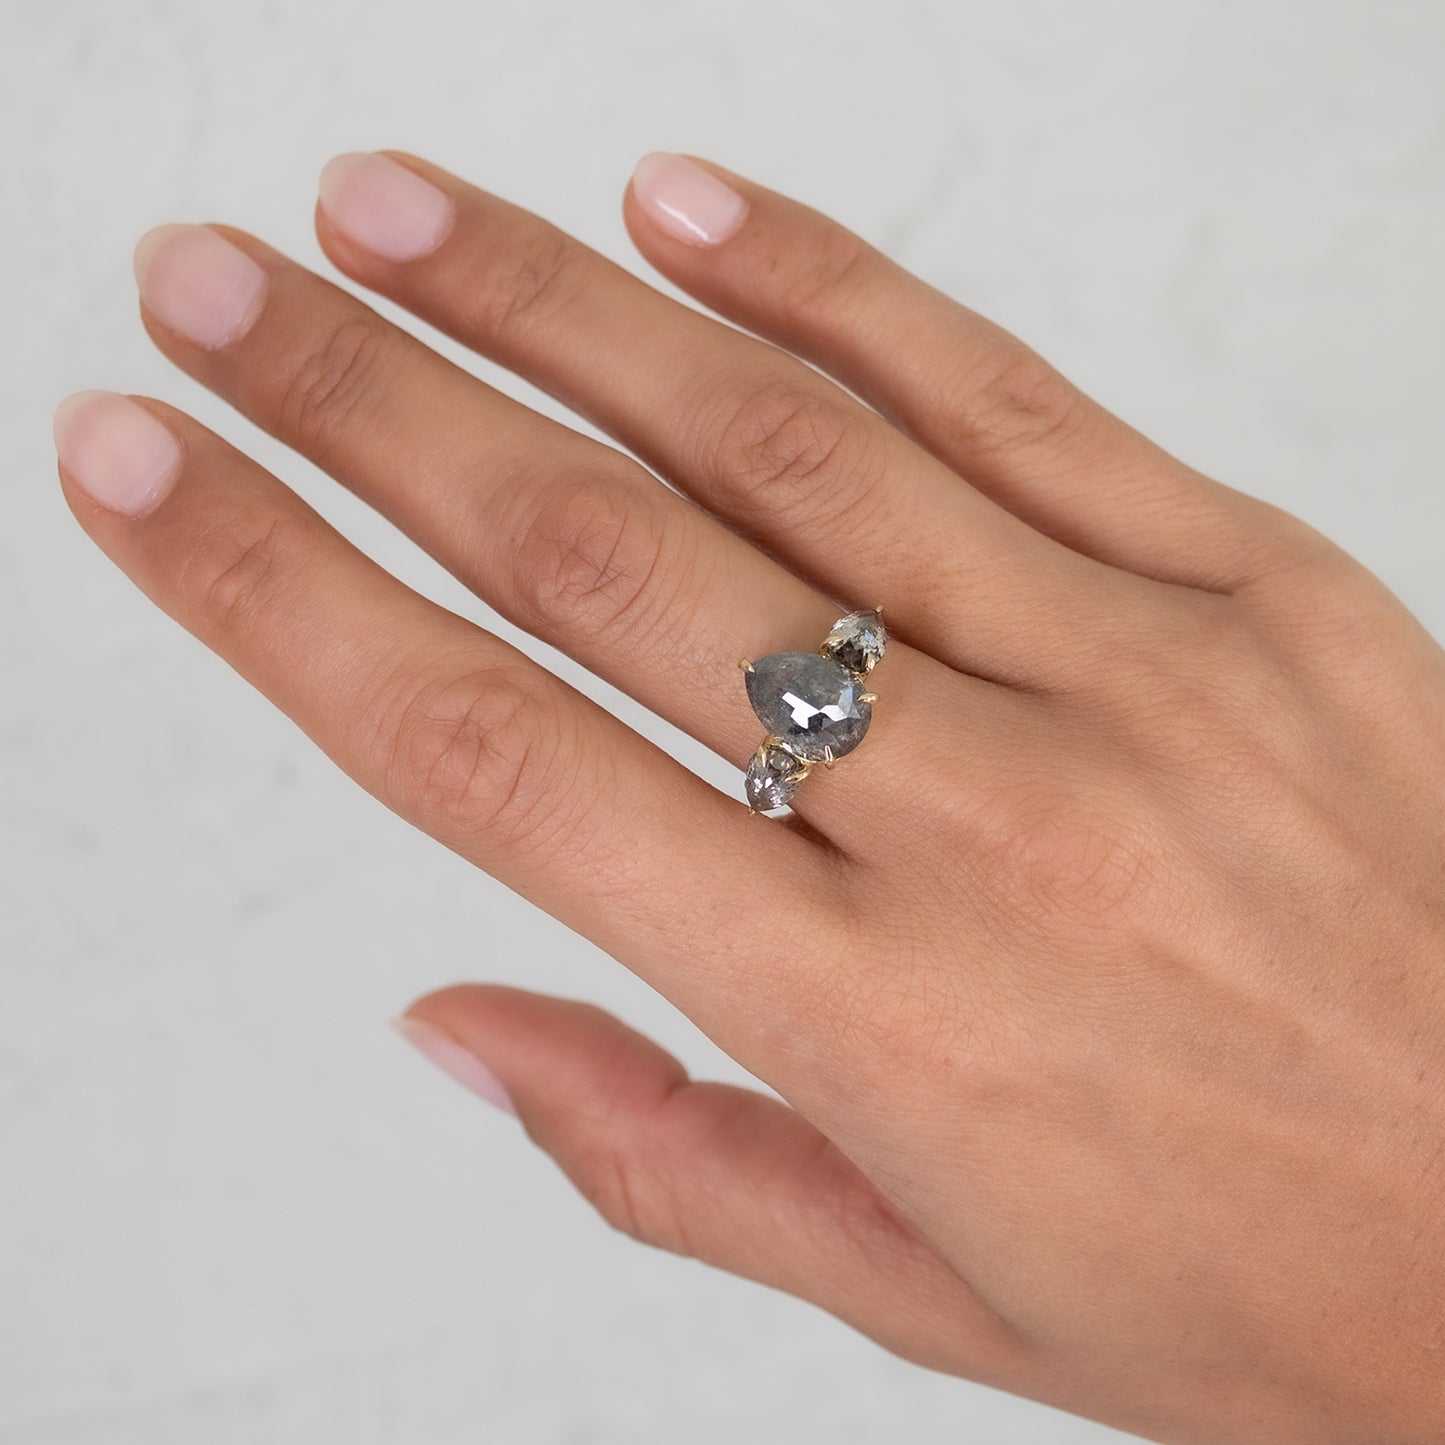 Speckled Lunar Diamond Ring